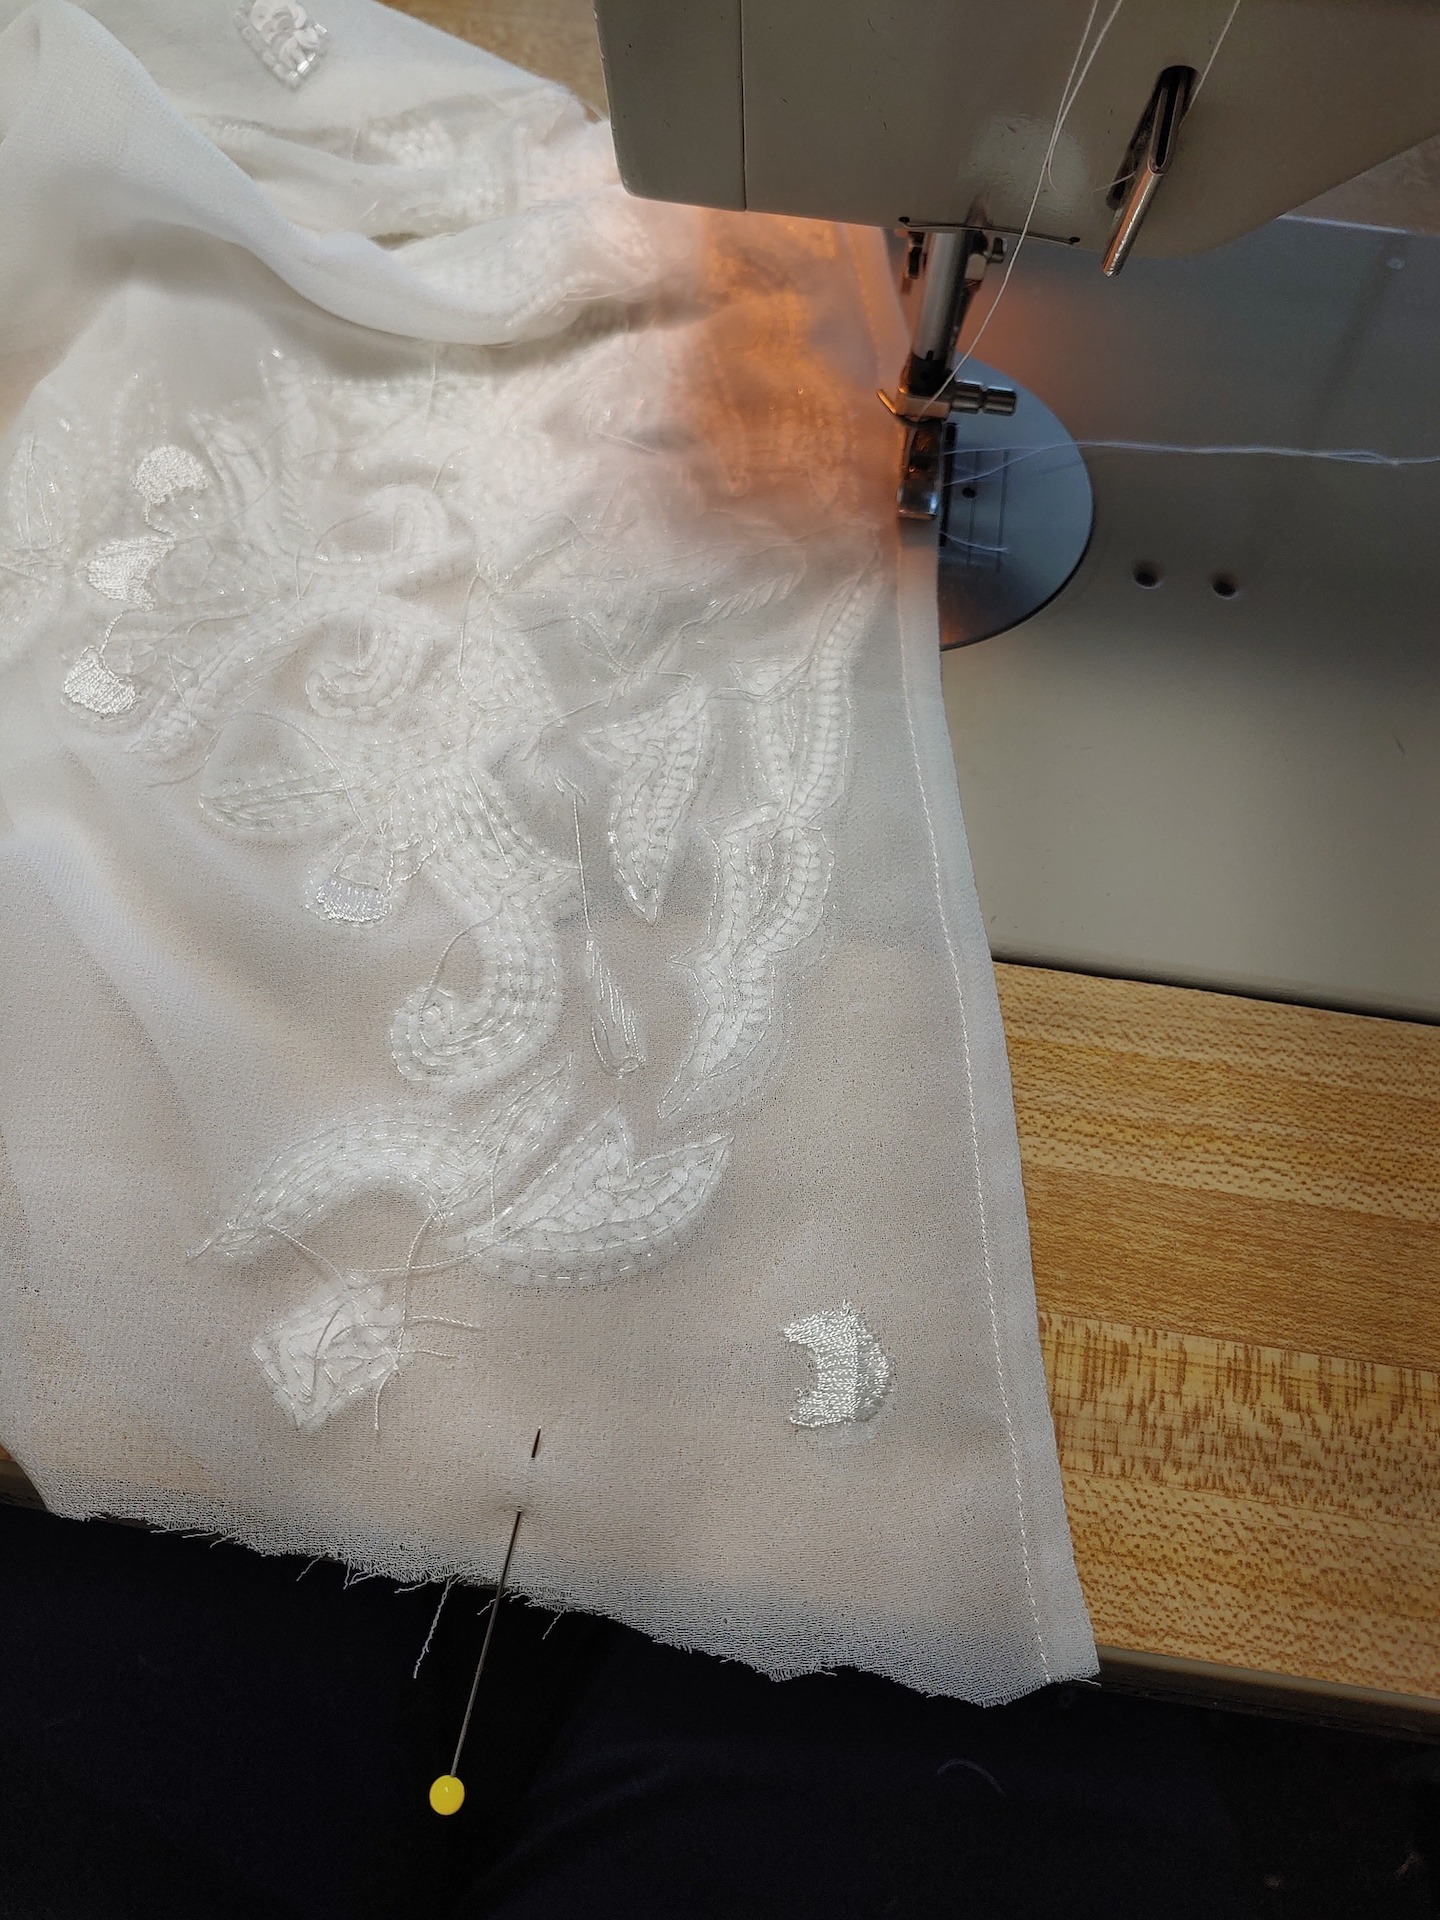 Sewing the hem of a wedding dress